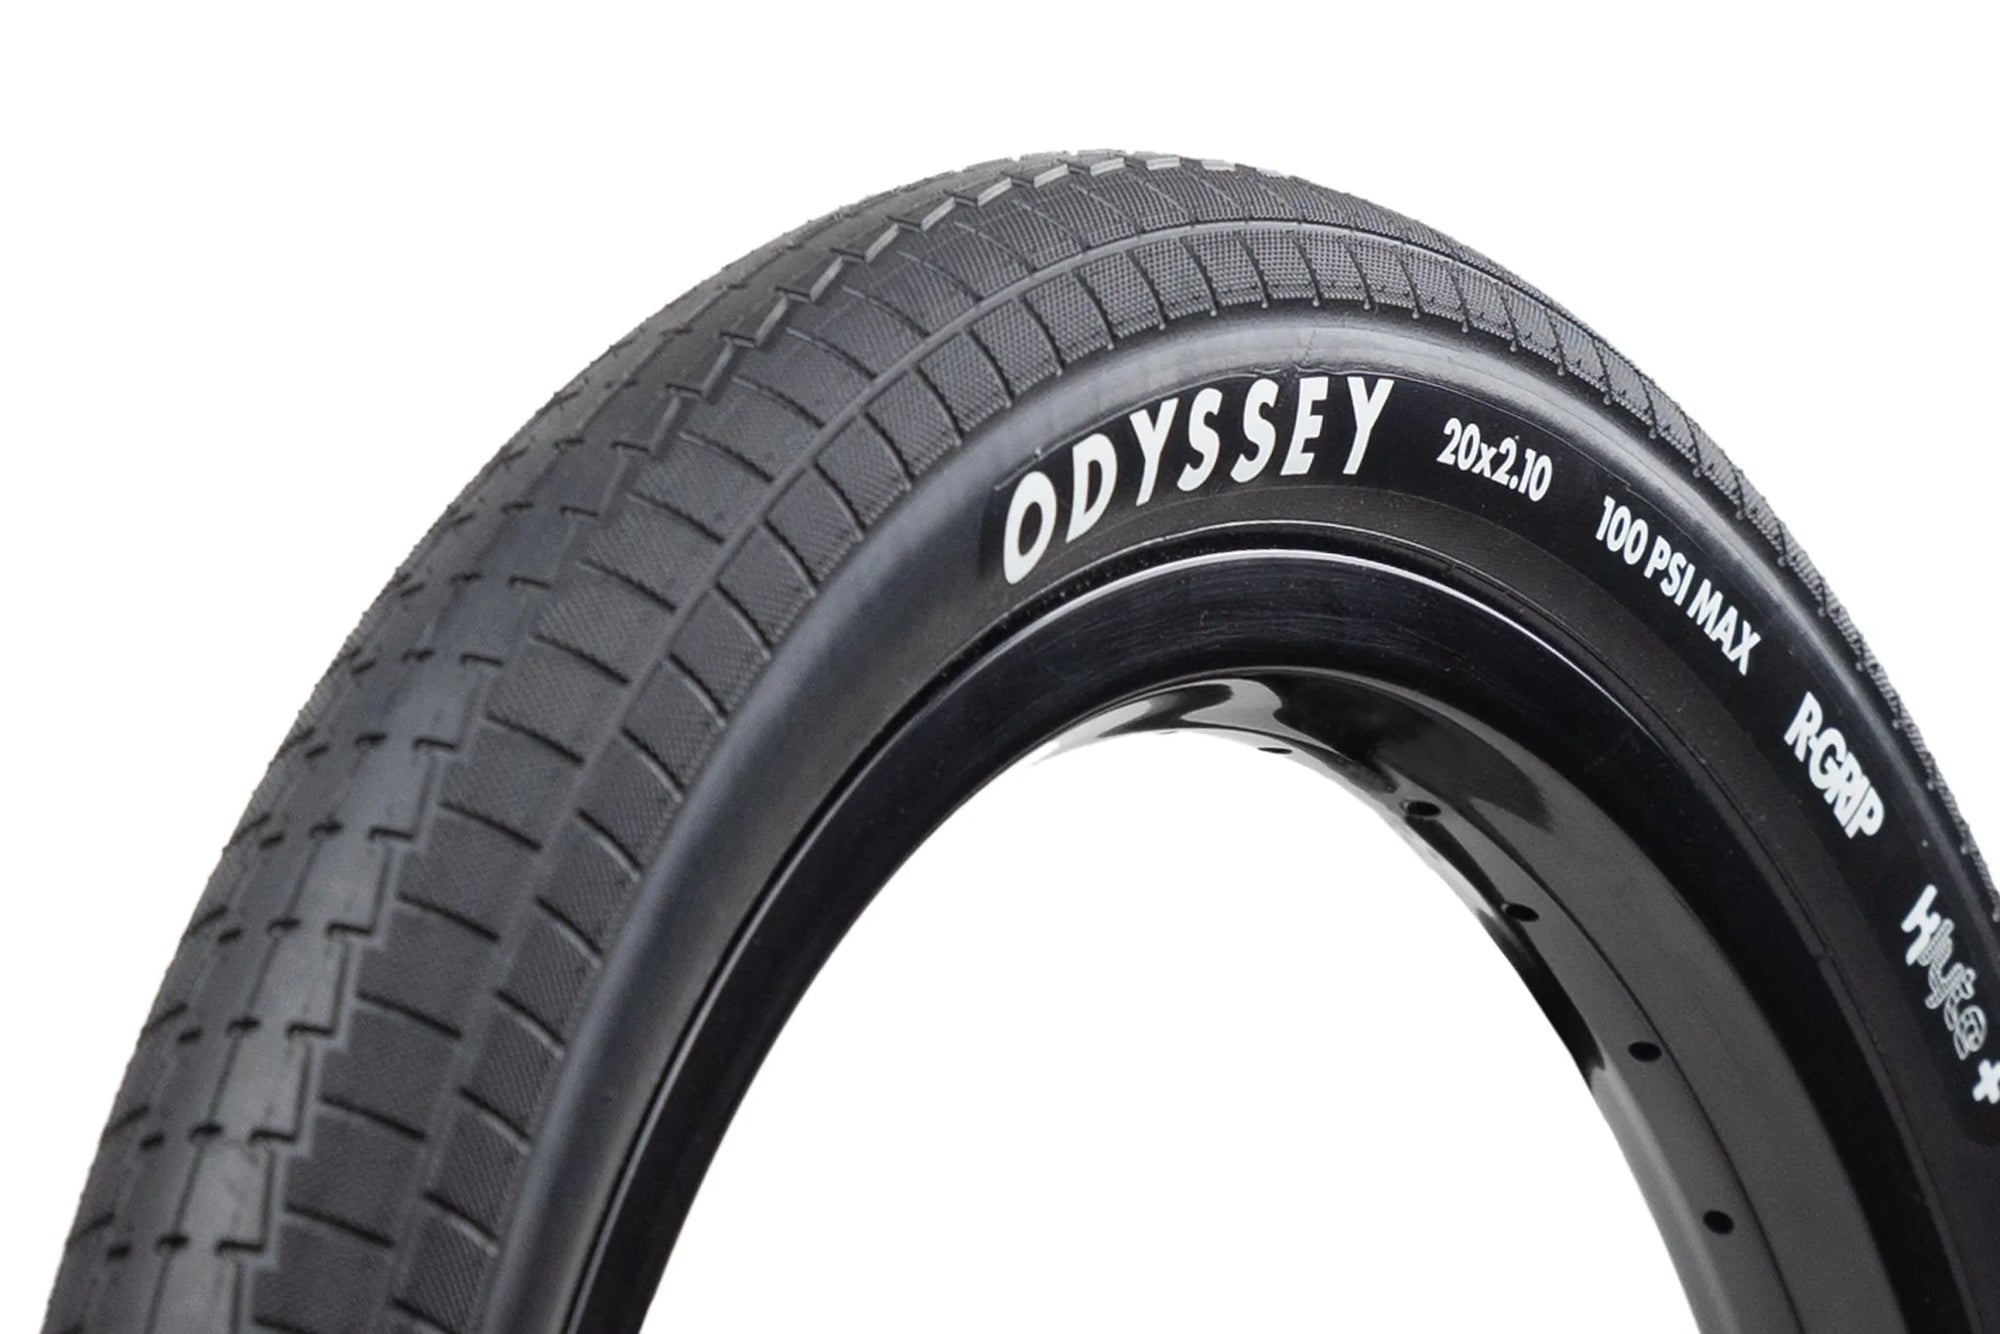 20x2.10 Odyssey Super Circuit Folding BMX Tire - 110psi - Black